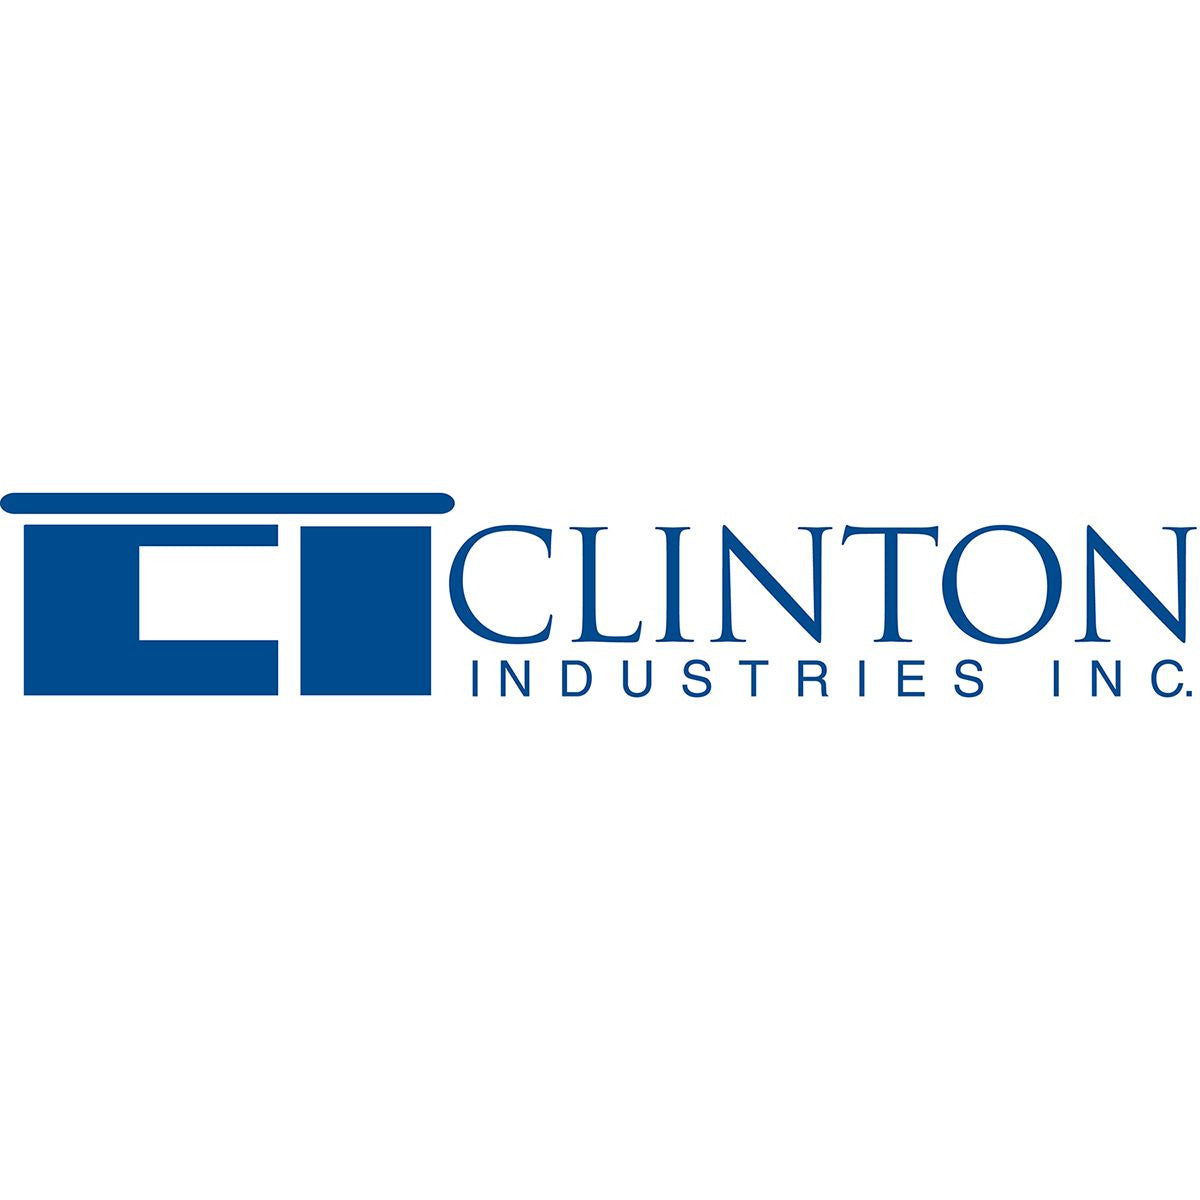 Clinton Industries logo